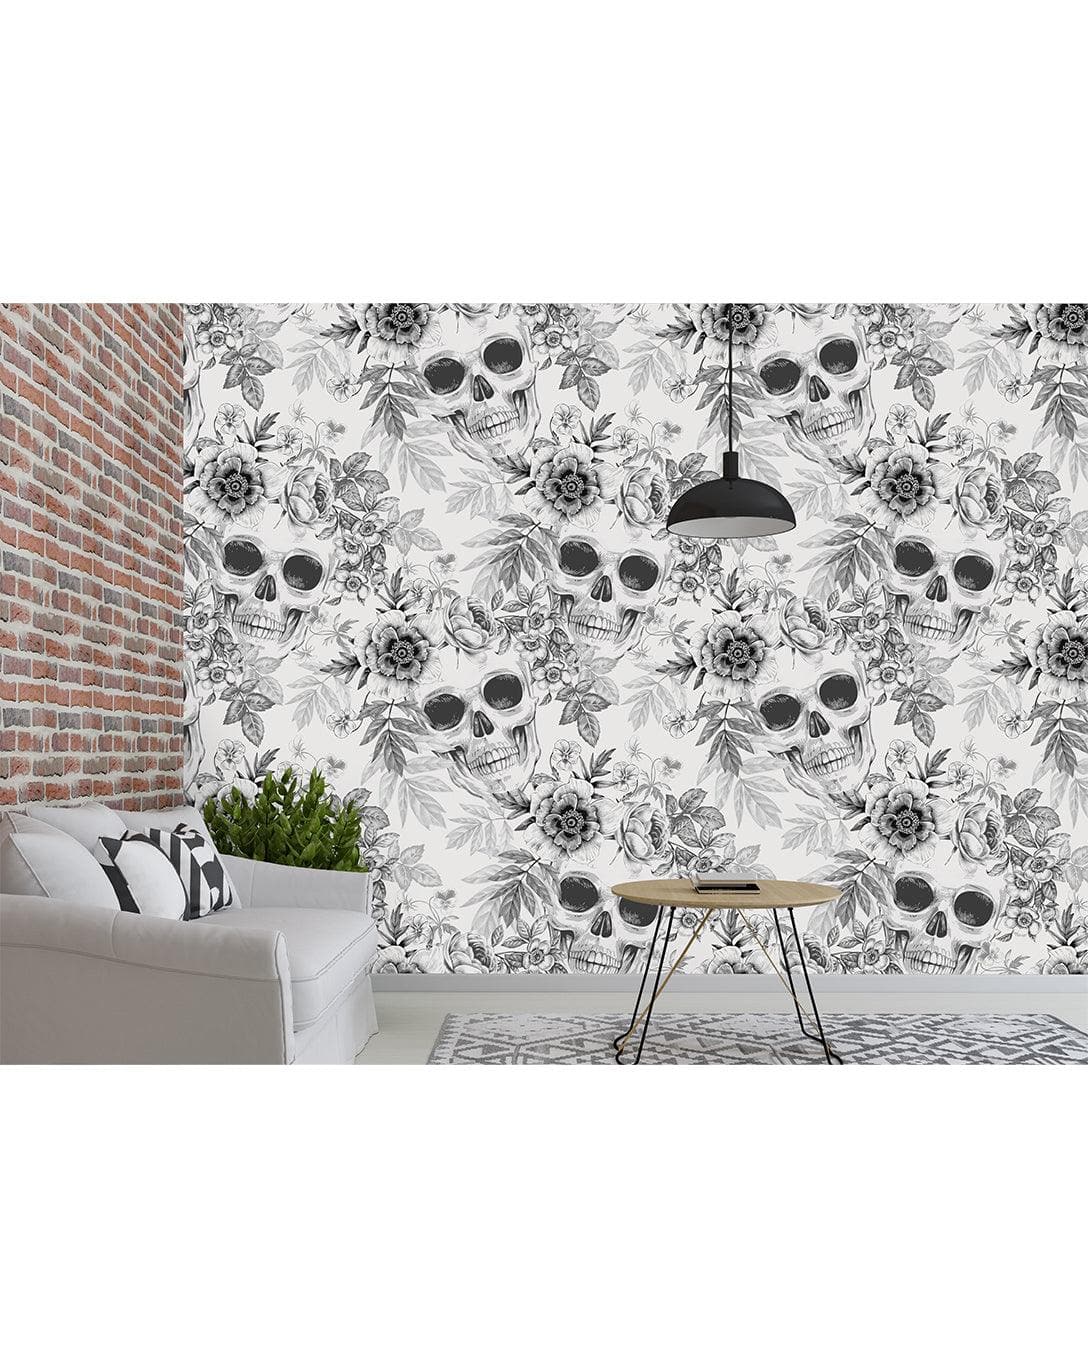 Black and White Skulls Flowers Self Adhesive Wallpaper Black and White Skulls Flowers Self Adhesive Wallpaper 